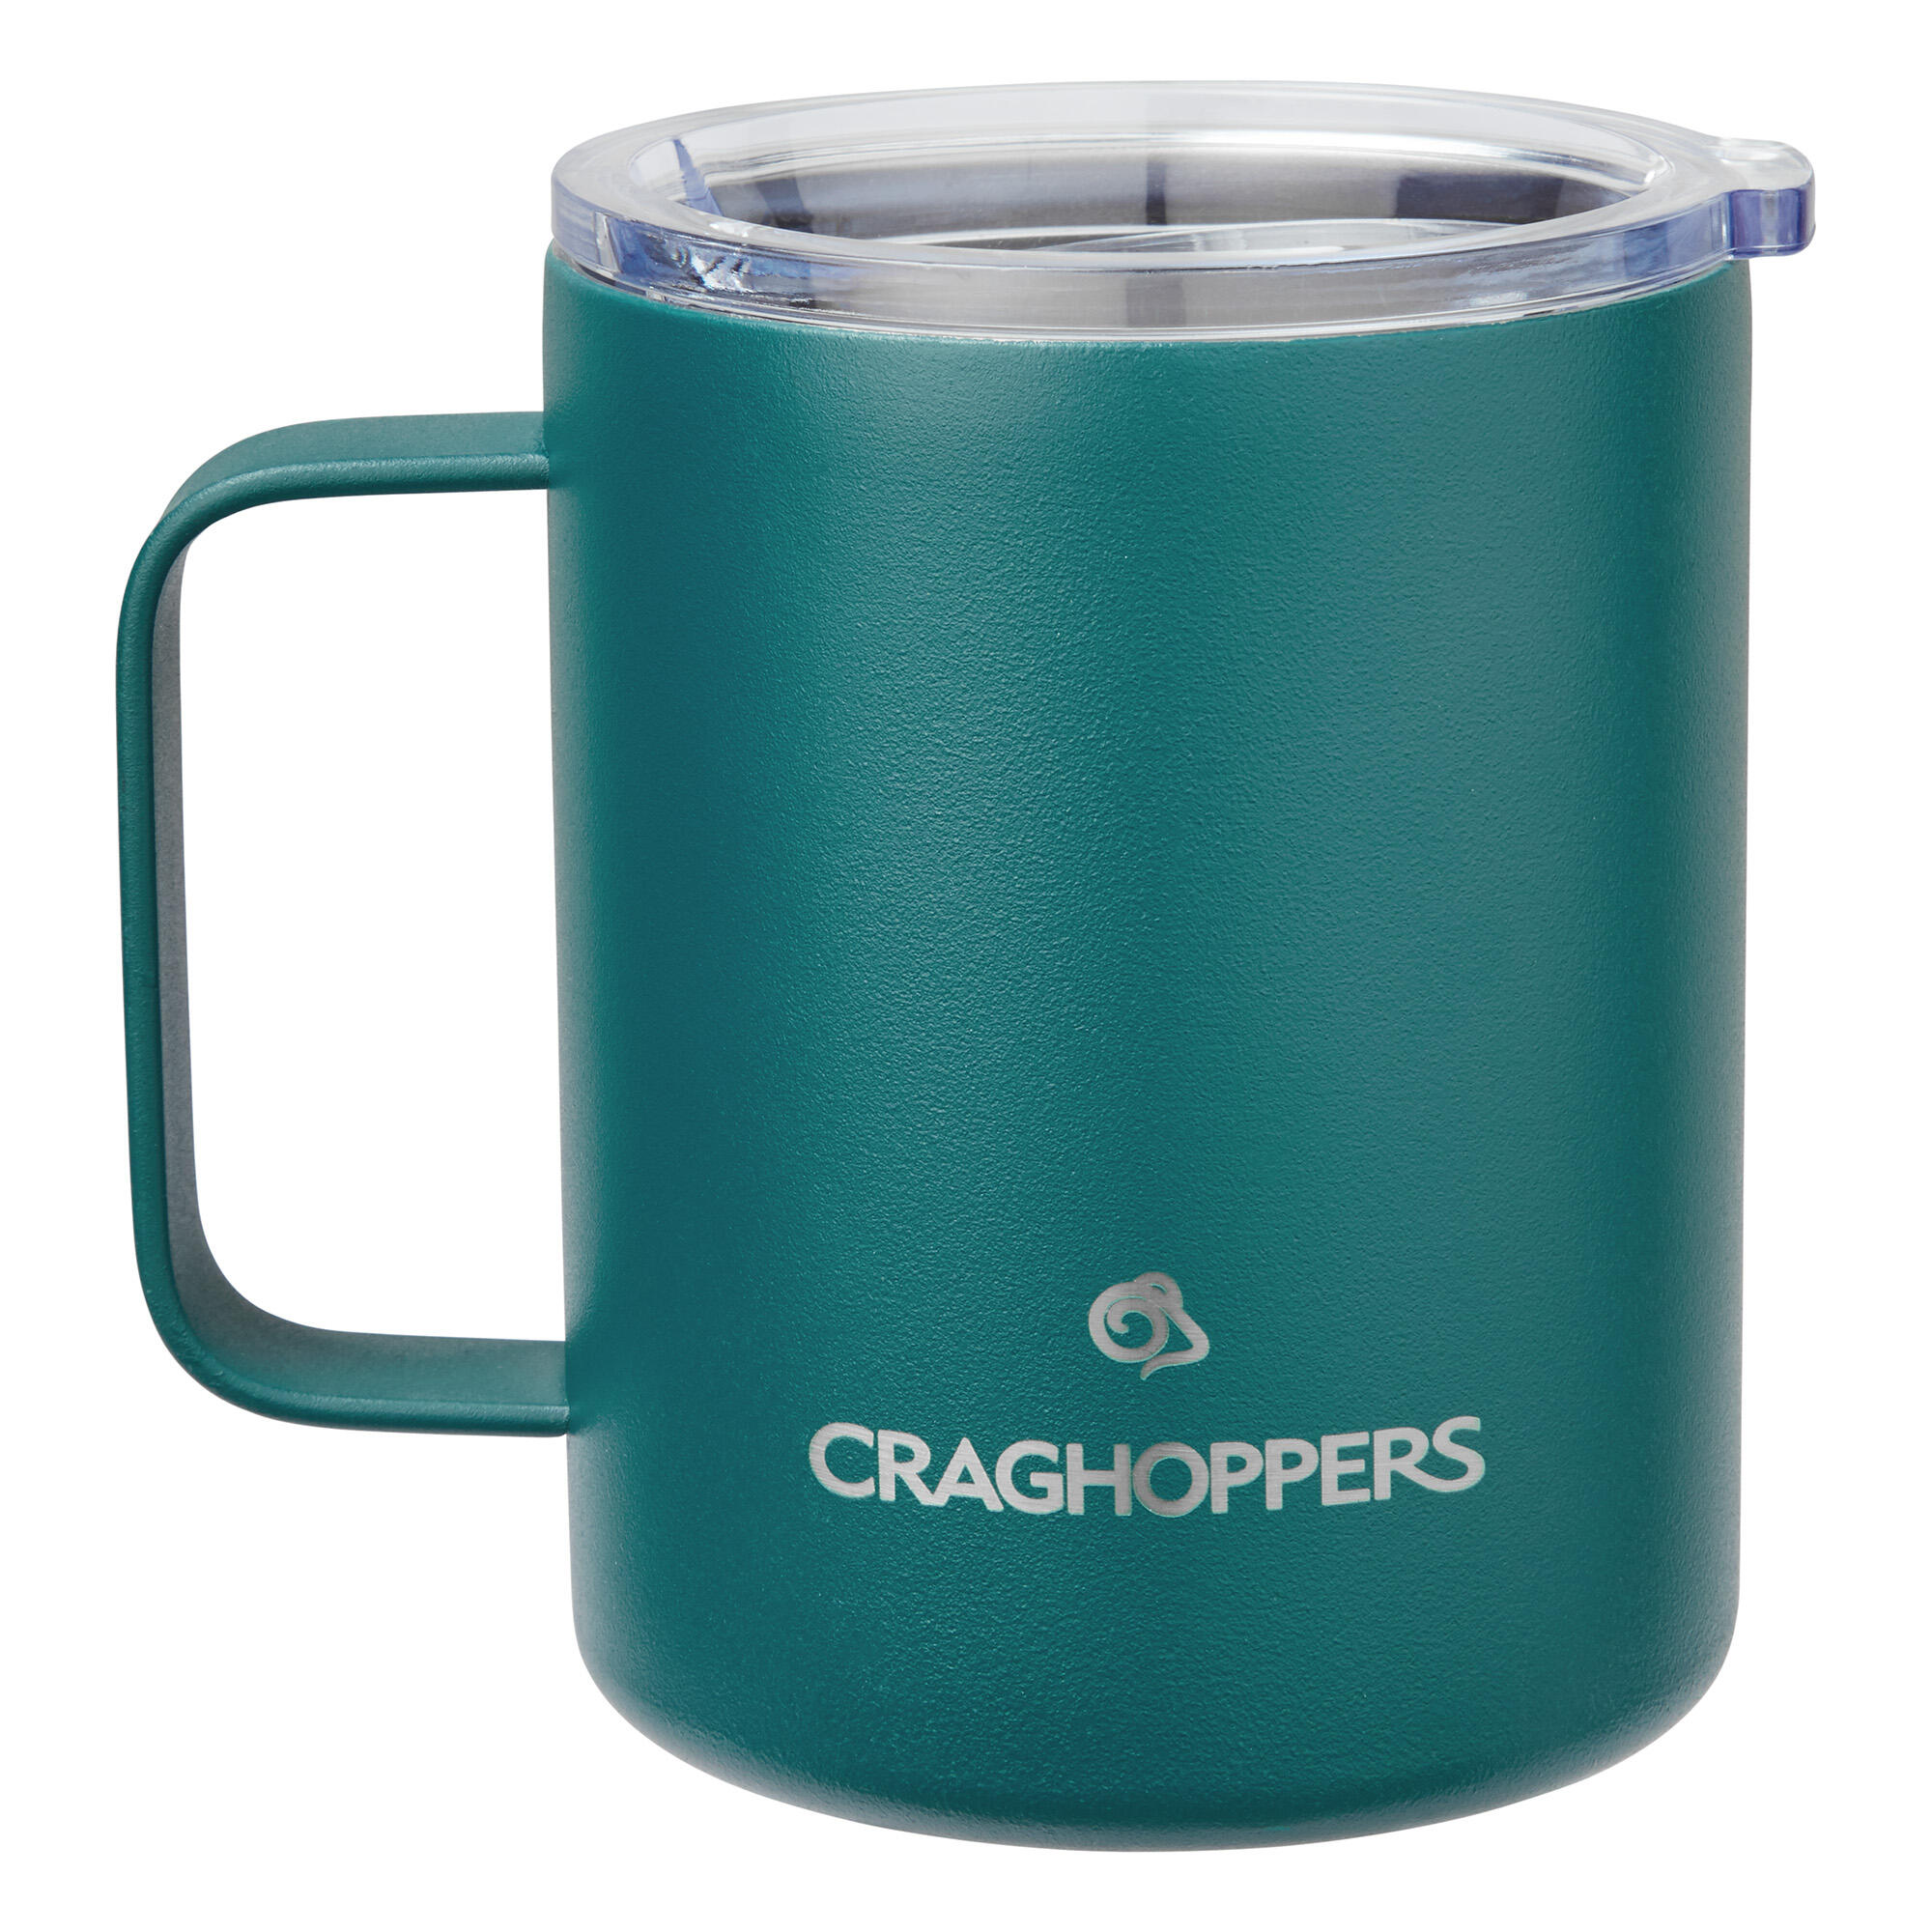 CRAGHOPPERS Insulated Mug